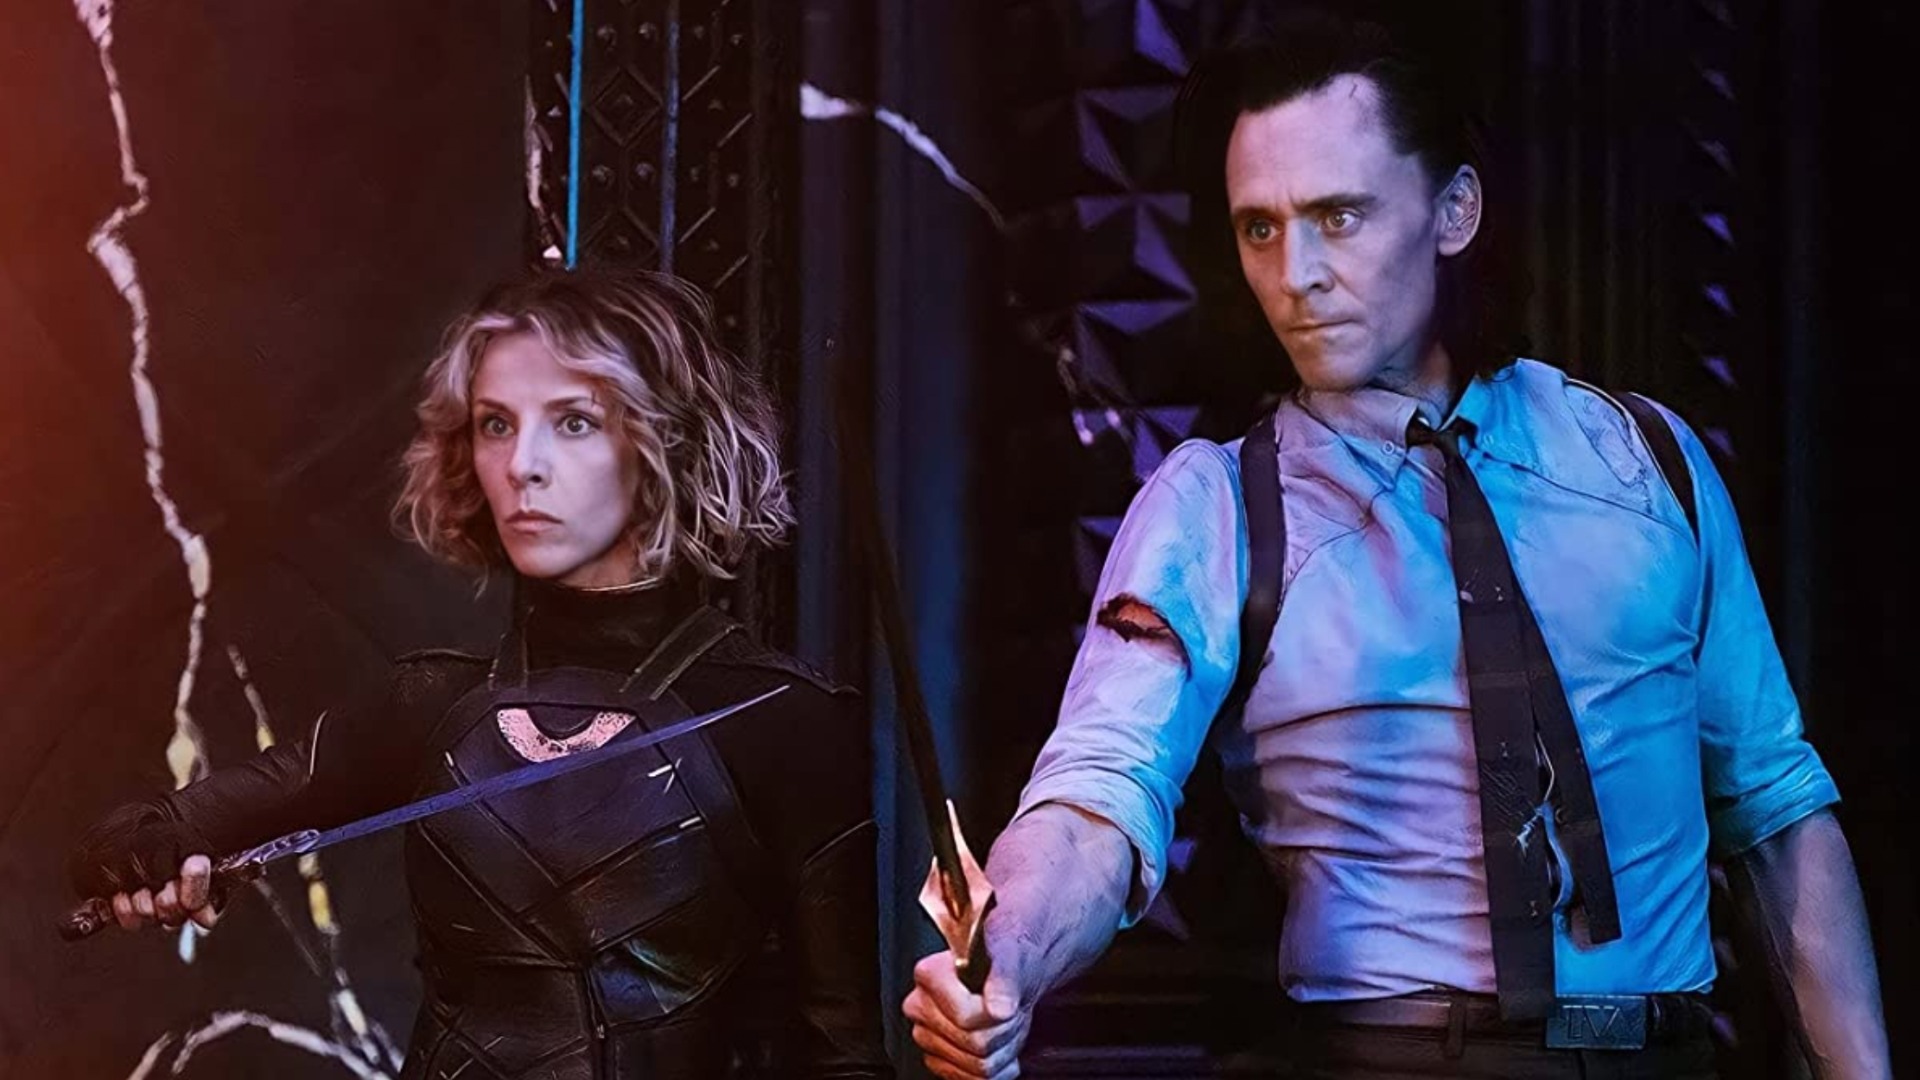 Sophia Di Martino and Tom Hiddleston in Loki